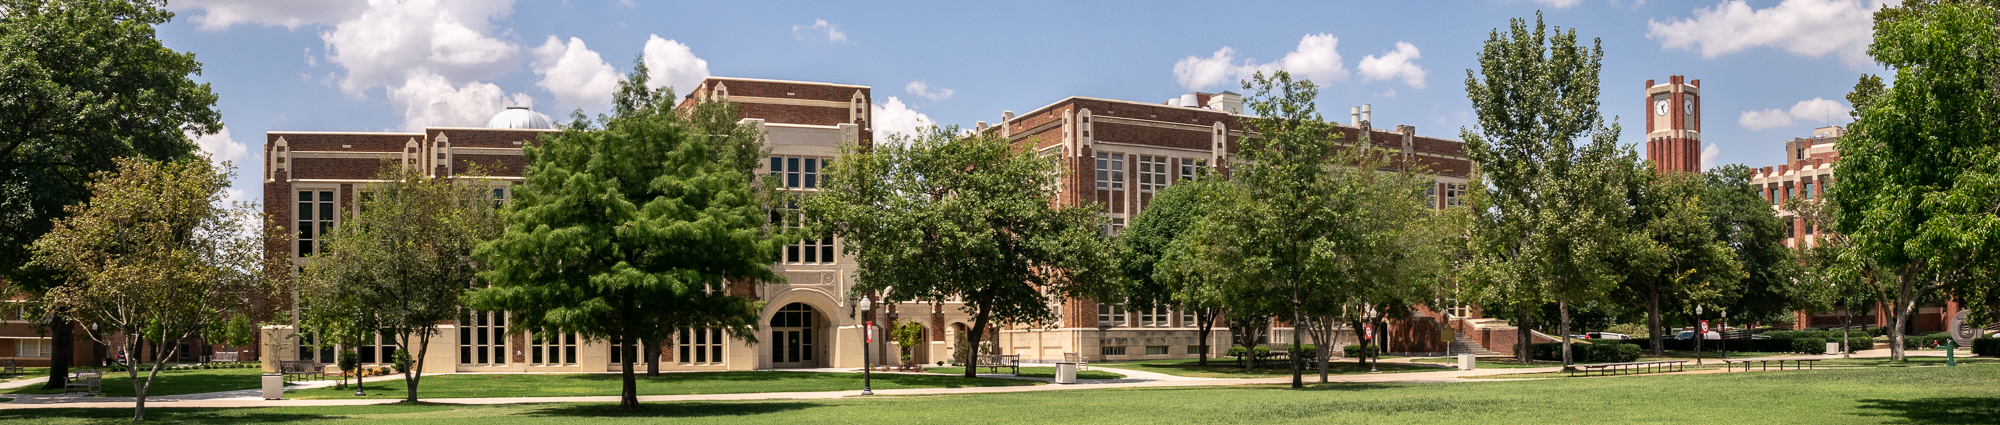 The University of Oklahoma campus